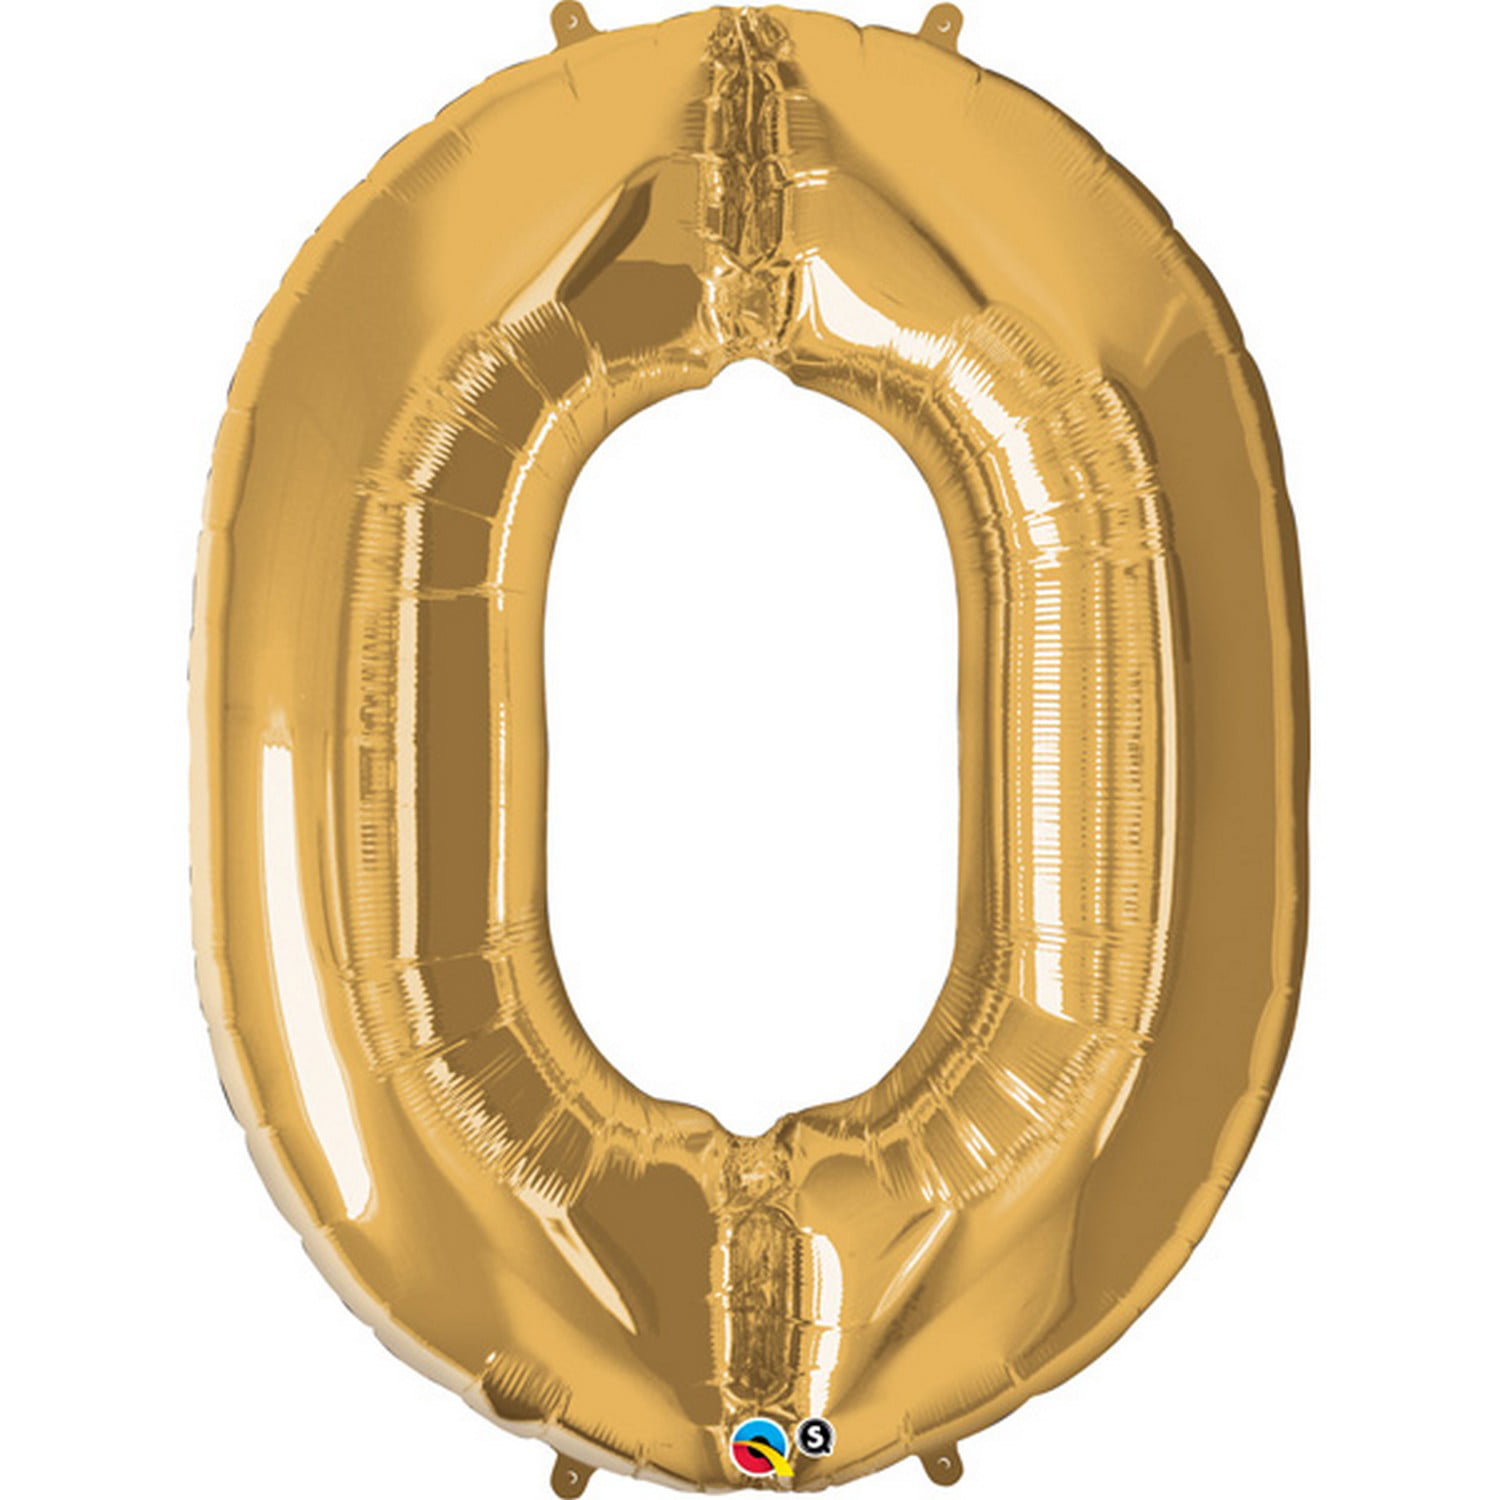 Number 2-34" Long Qualatex Shiny Gold Metallic Birthday Balloon 